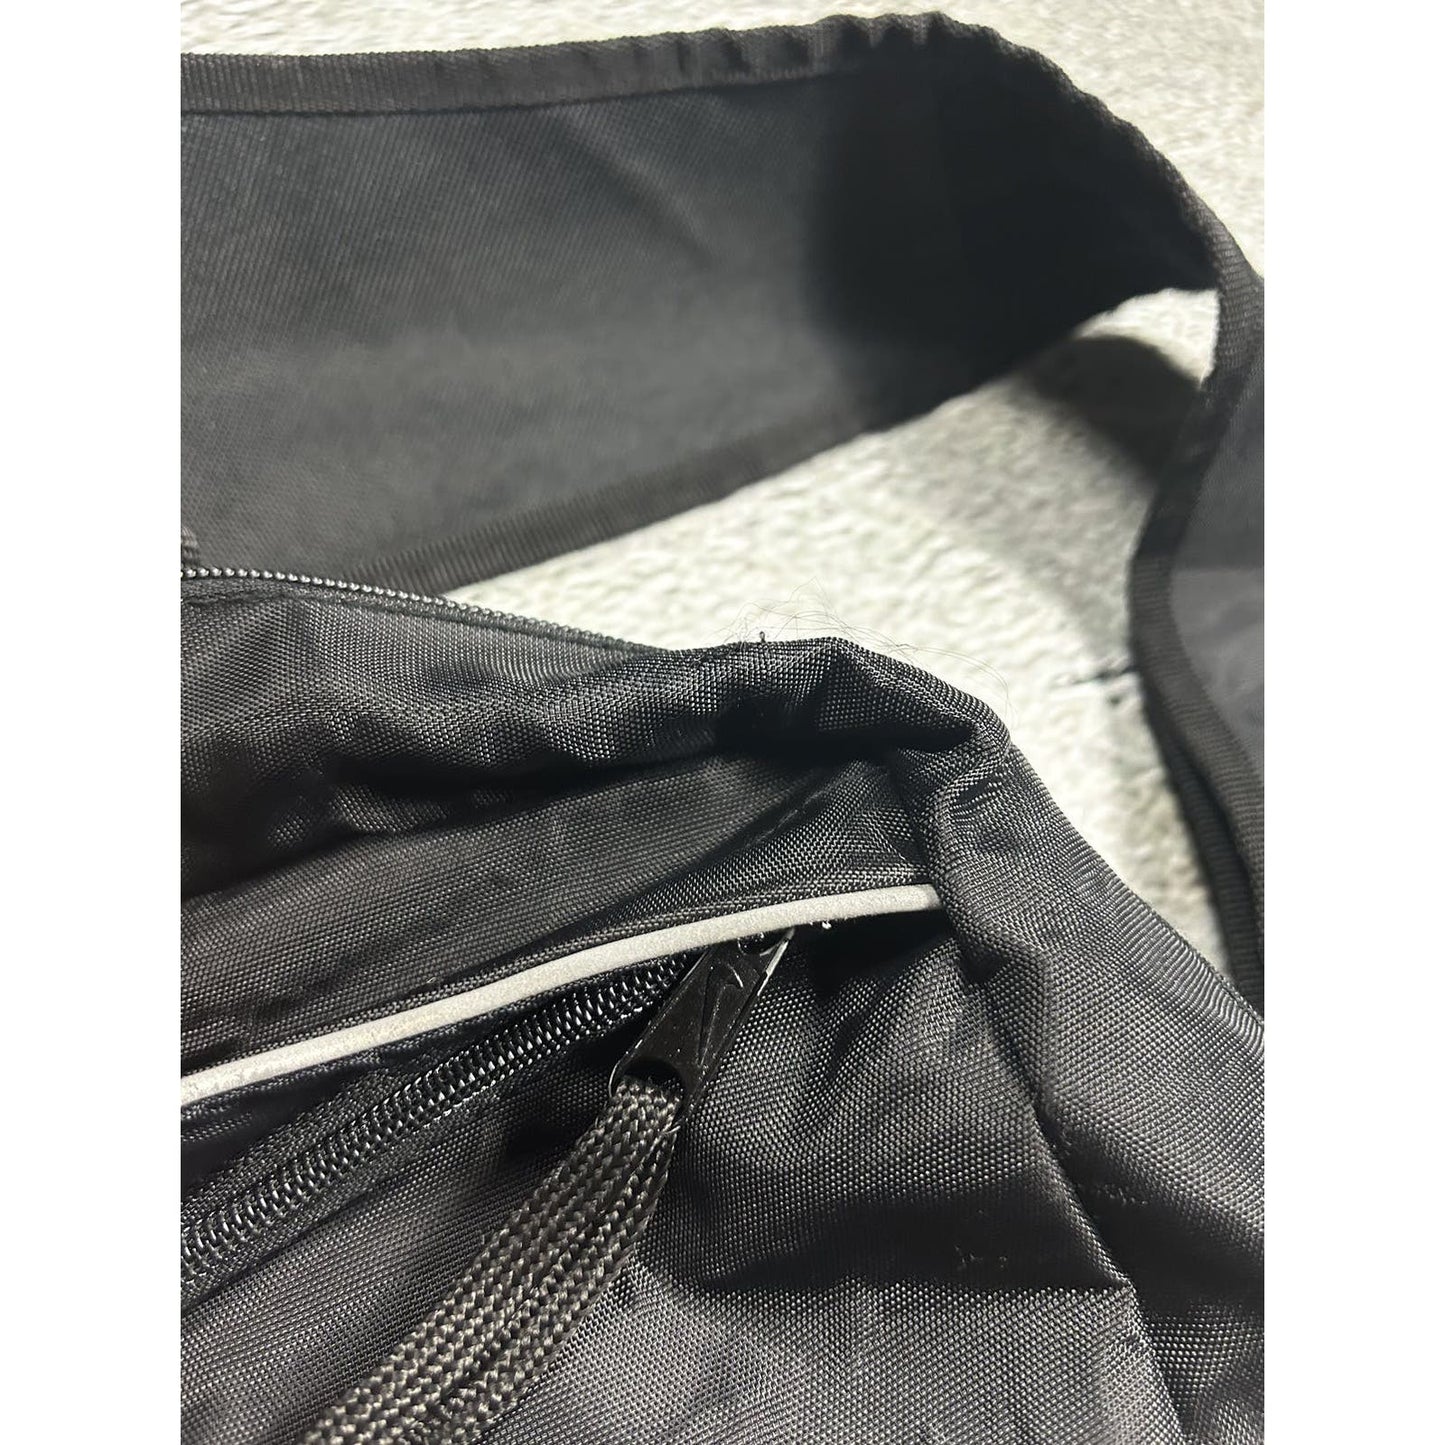 Nike sling bag vintage black Y2K